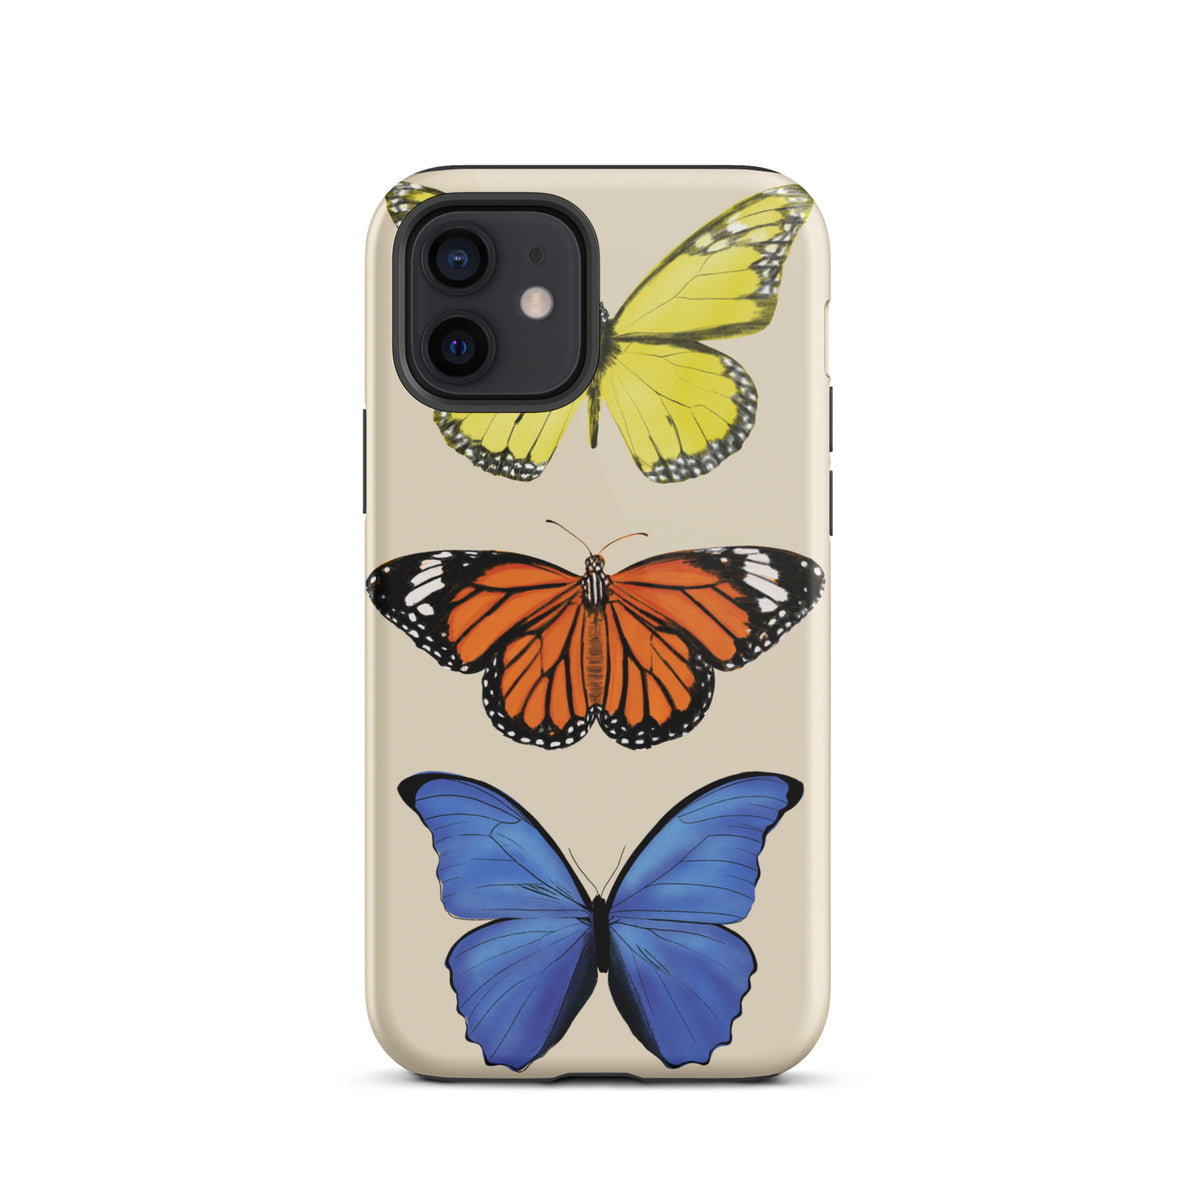 Beige iphone case with butterflies